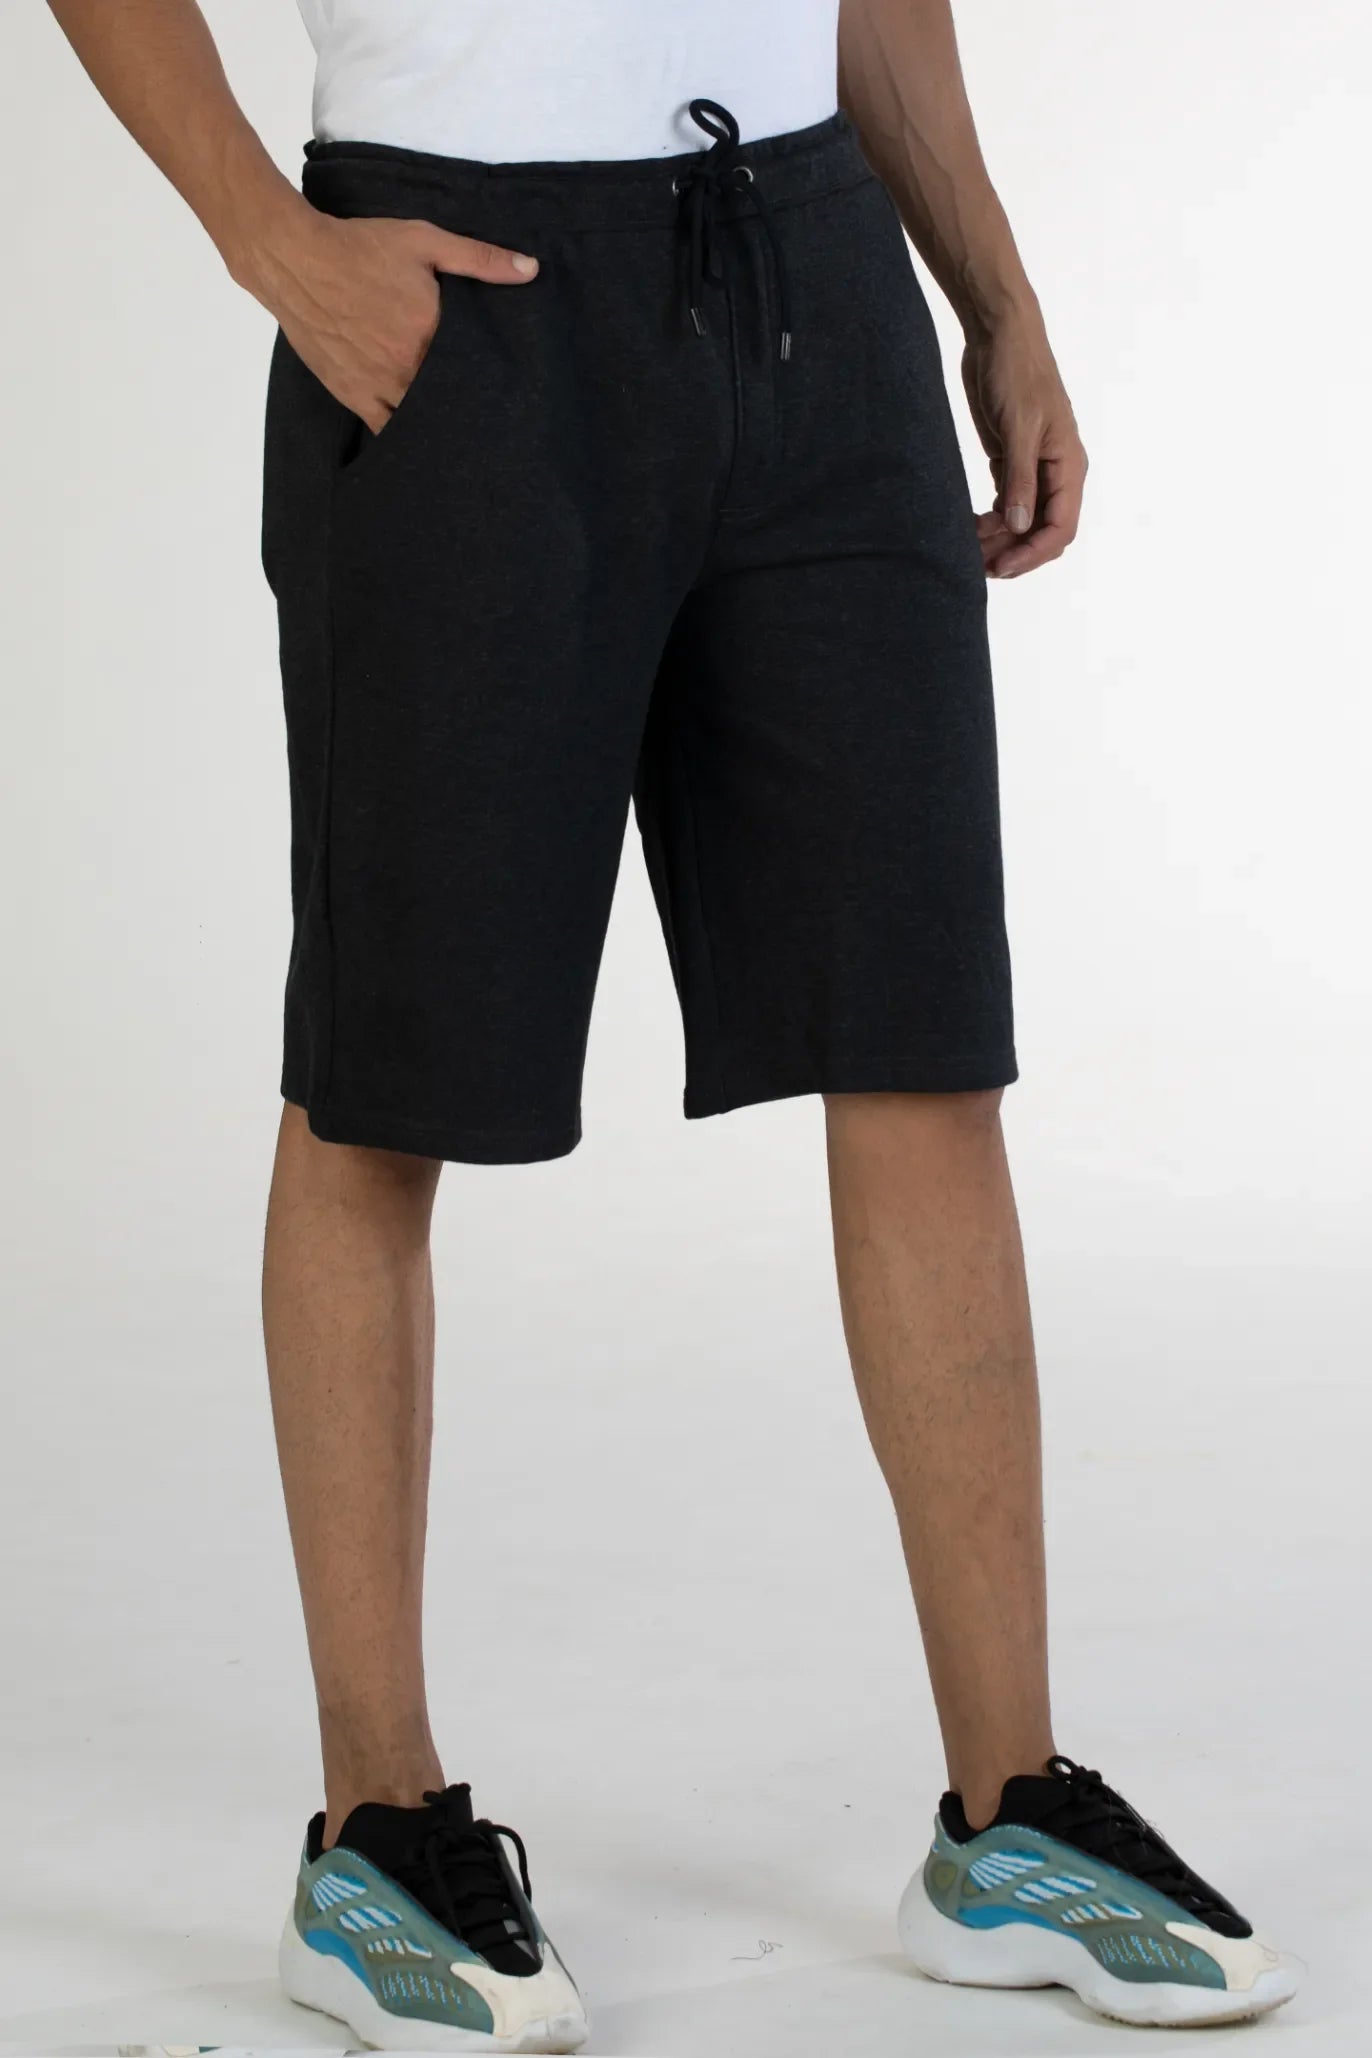 Charcoal solid knit cotton men's shorts